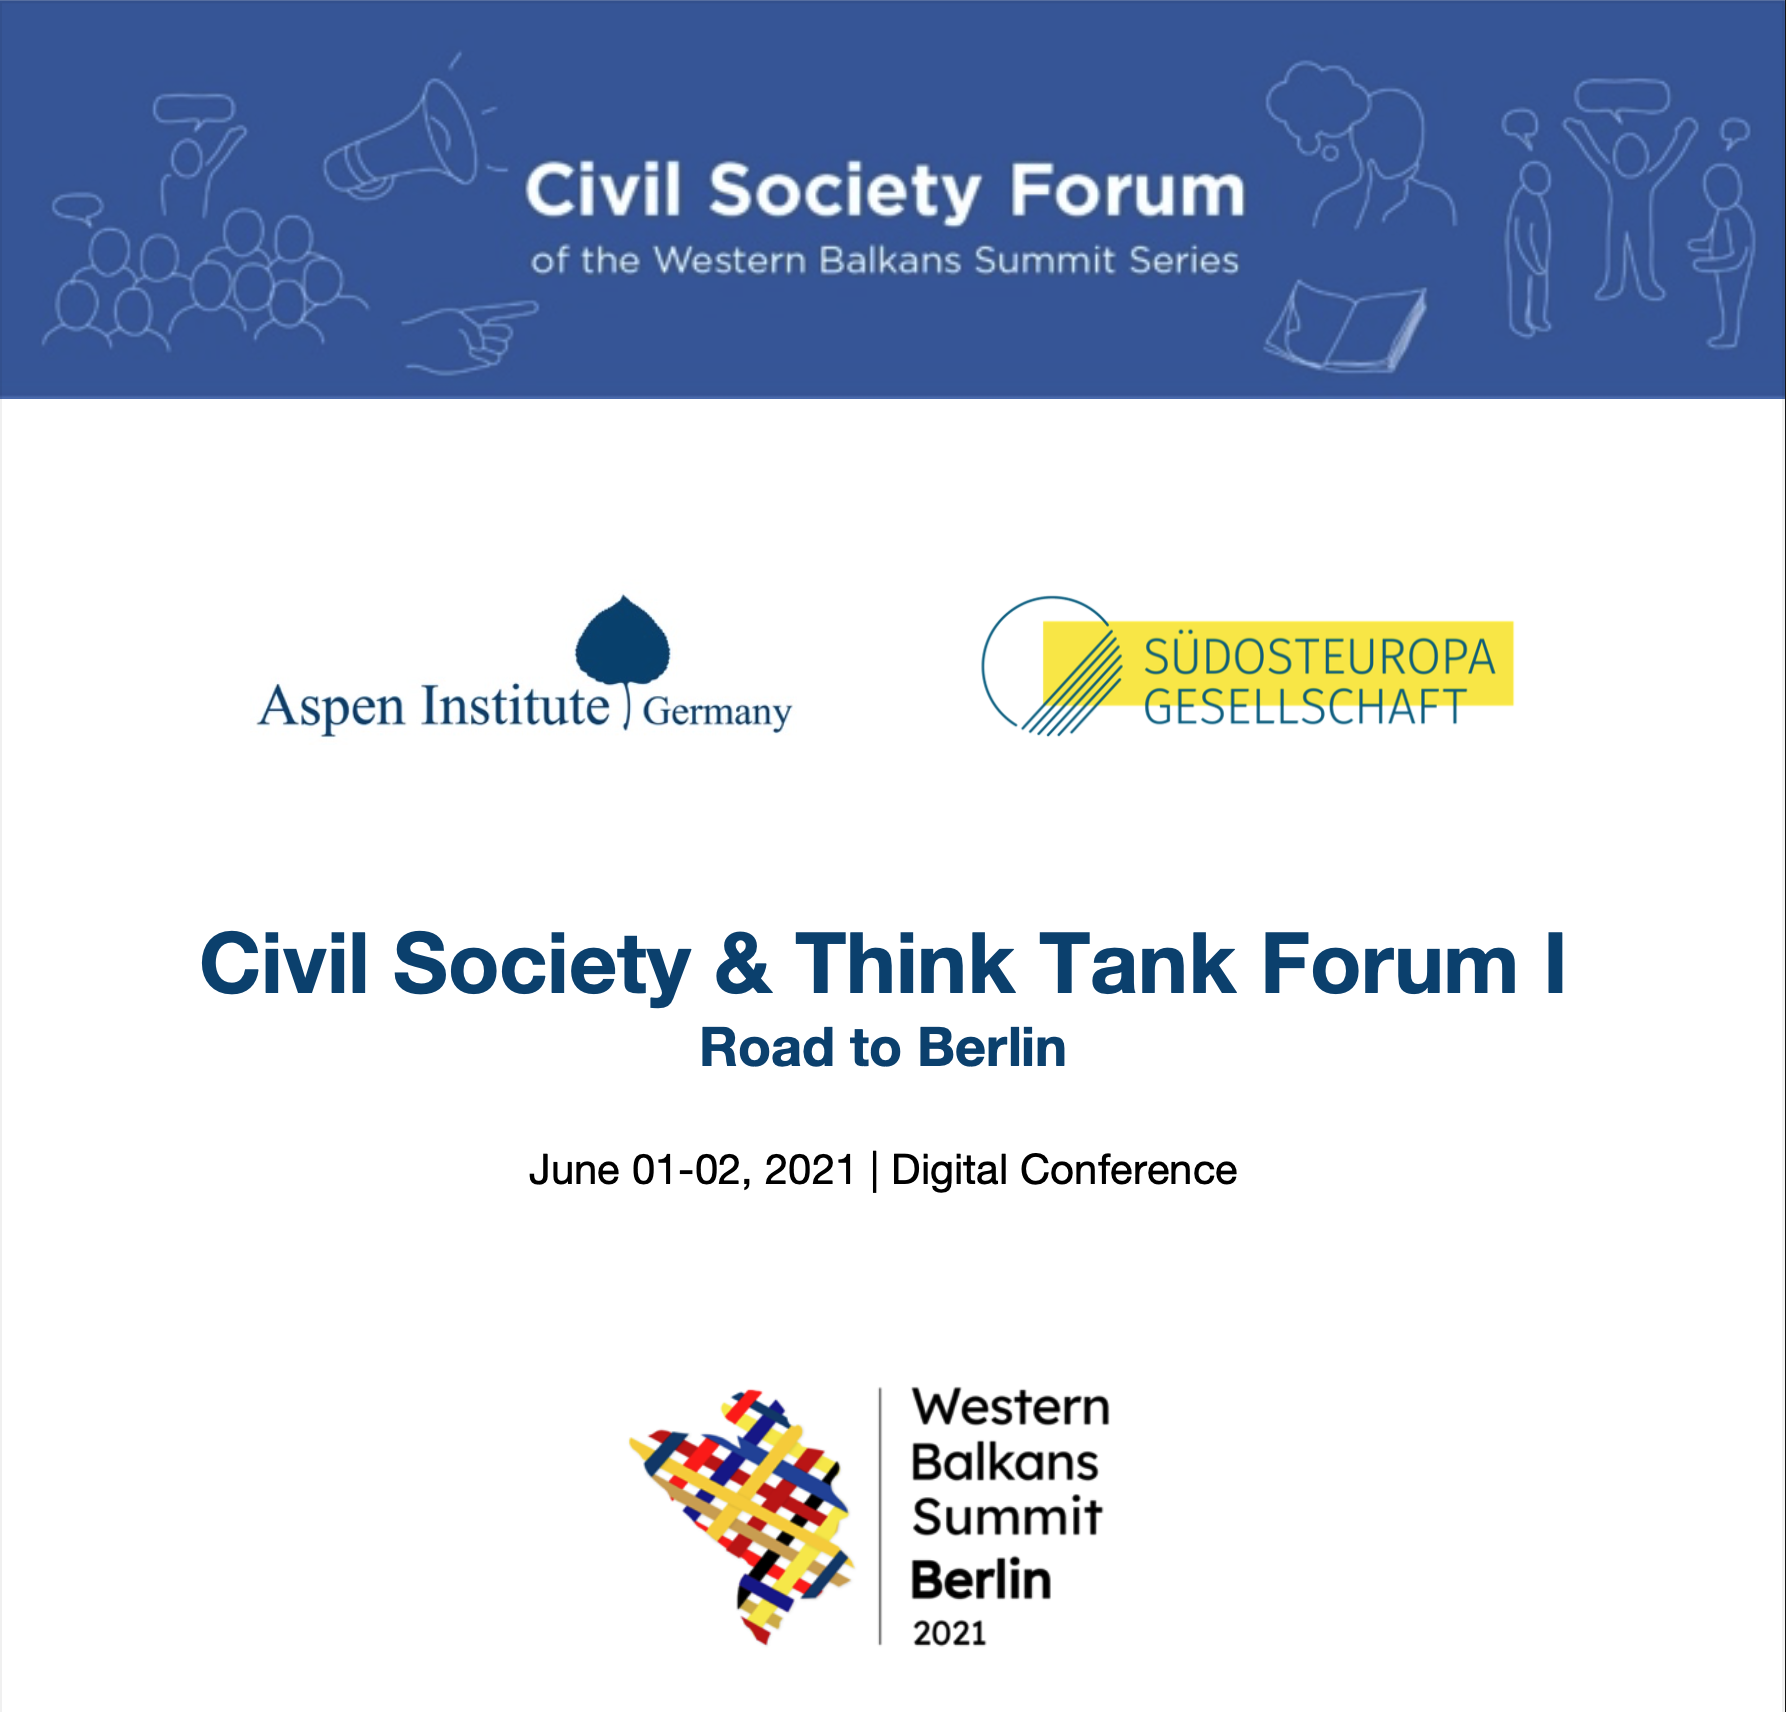 Civil Society & Think Tank Forum